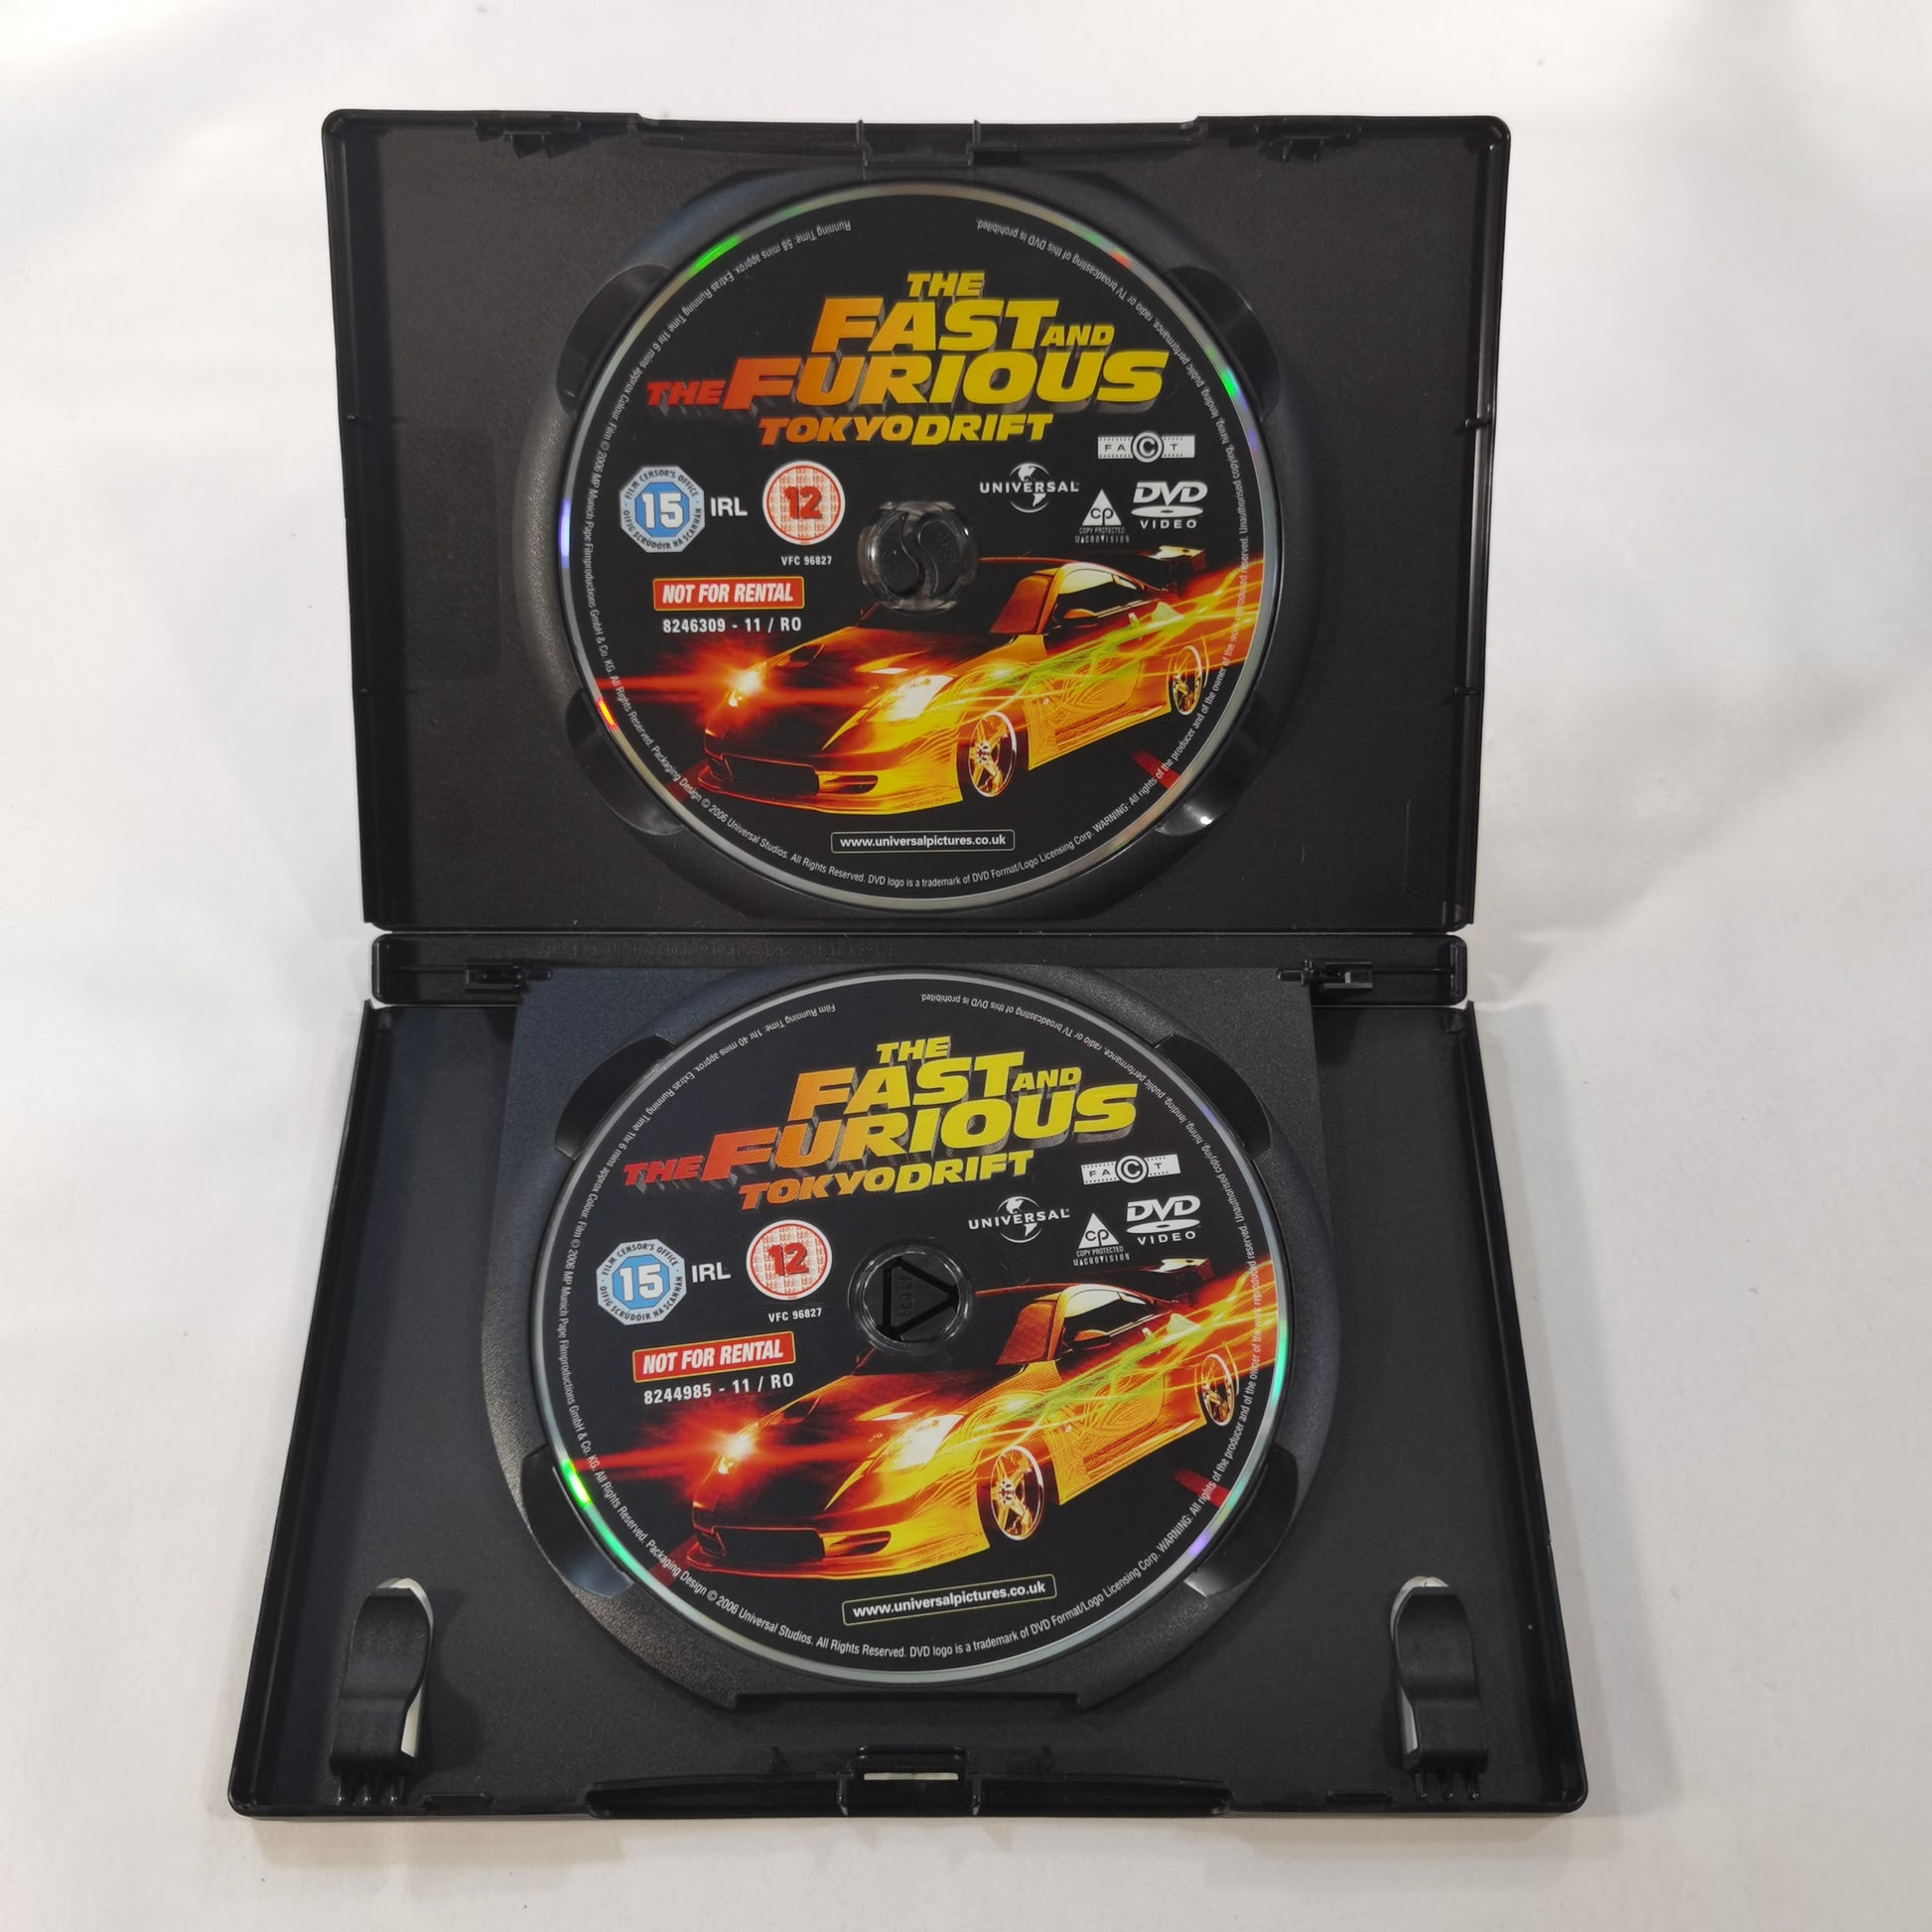 Fast & Furious: Tokyo Drift (2006) - DVD UK 2006 2-Disc Special Edition